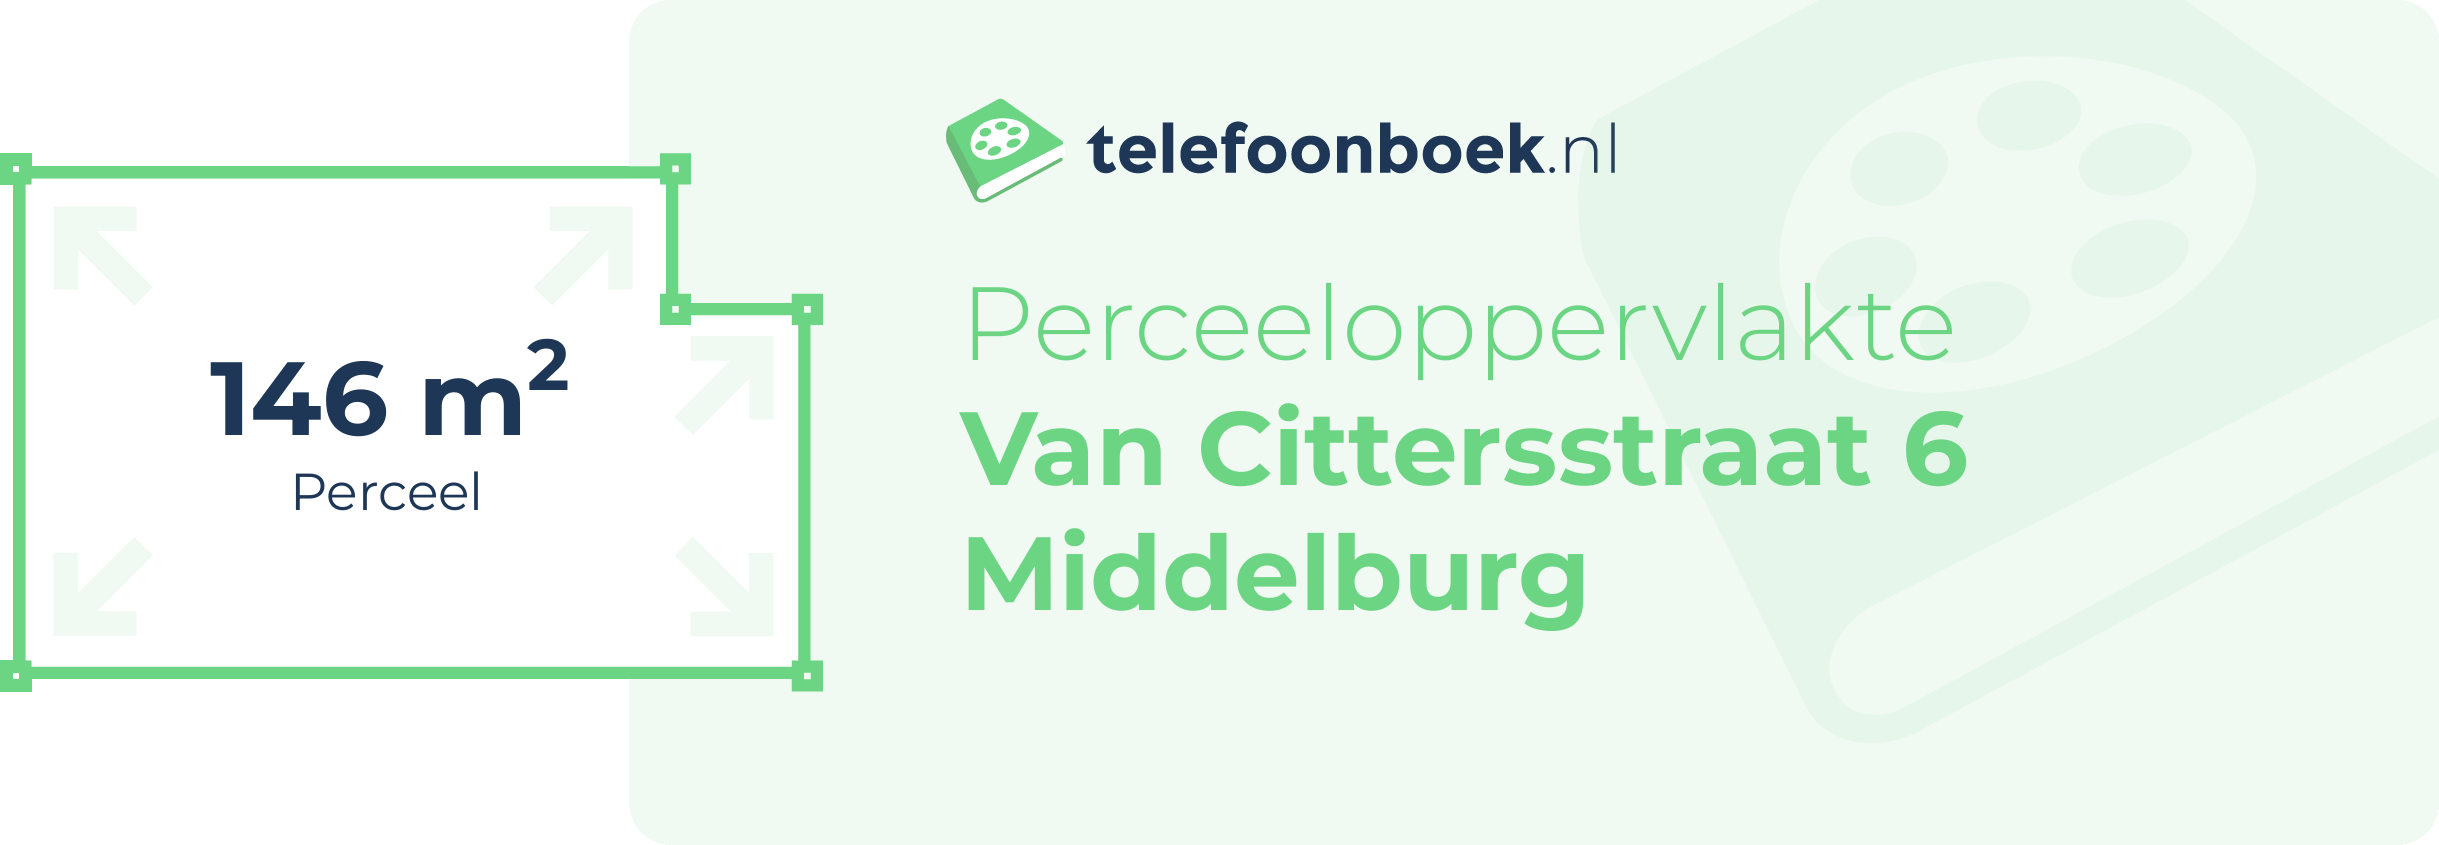 Perceeloppervlakte Van Cittersstraat 6 Middelburg